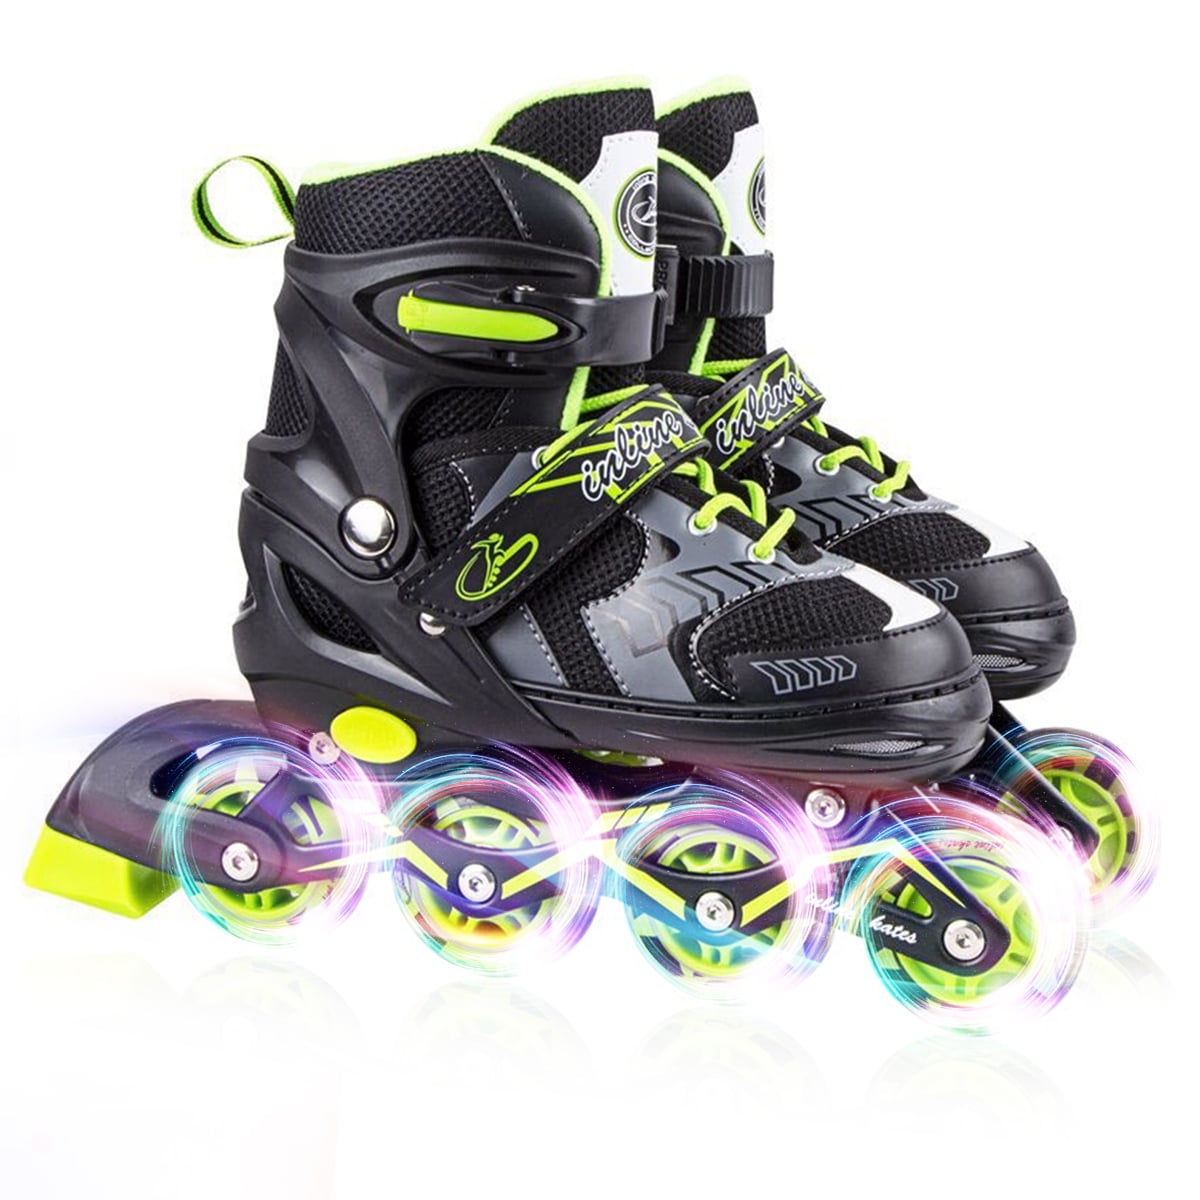 Evokem Adjustable Kids Boys Girls Inline Skate Shoes with Illumination Wheels Breathable Mesh and Aluminum Frame 